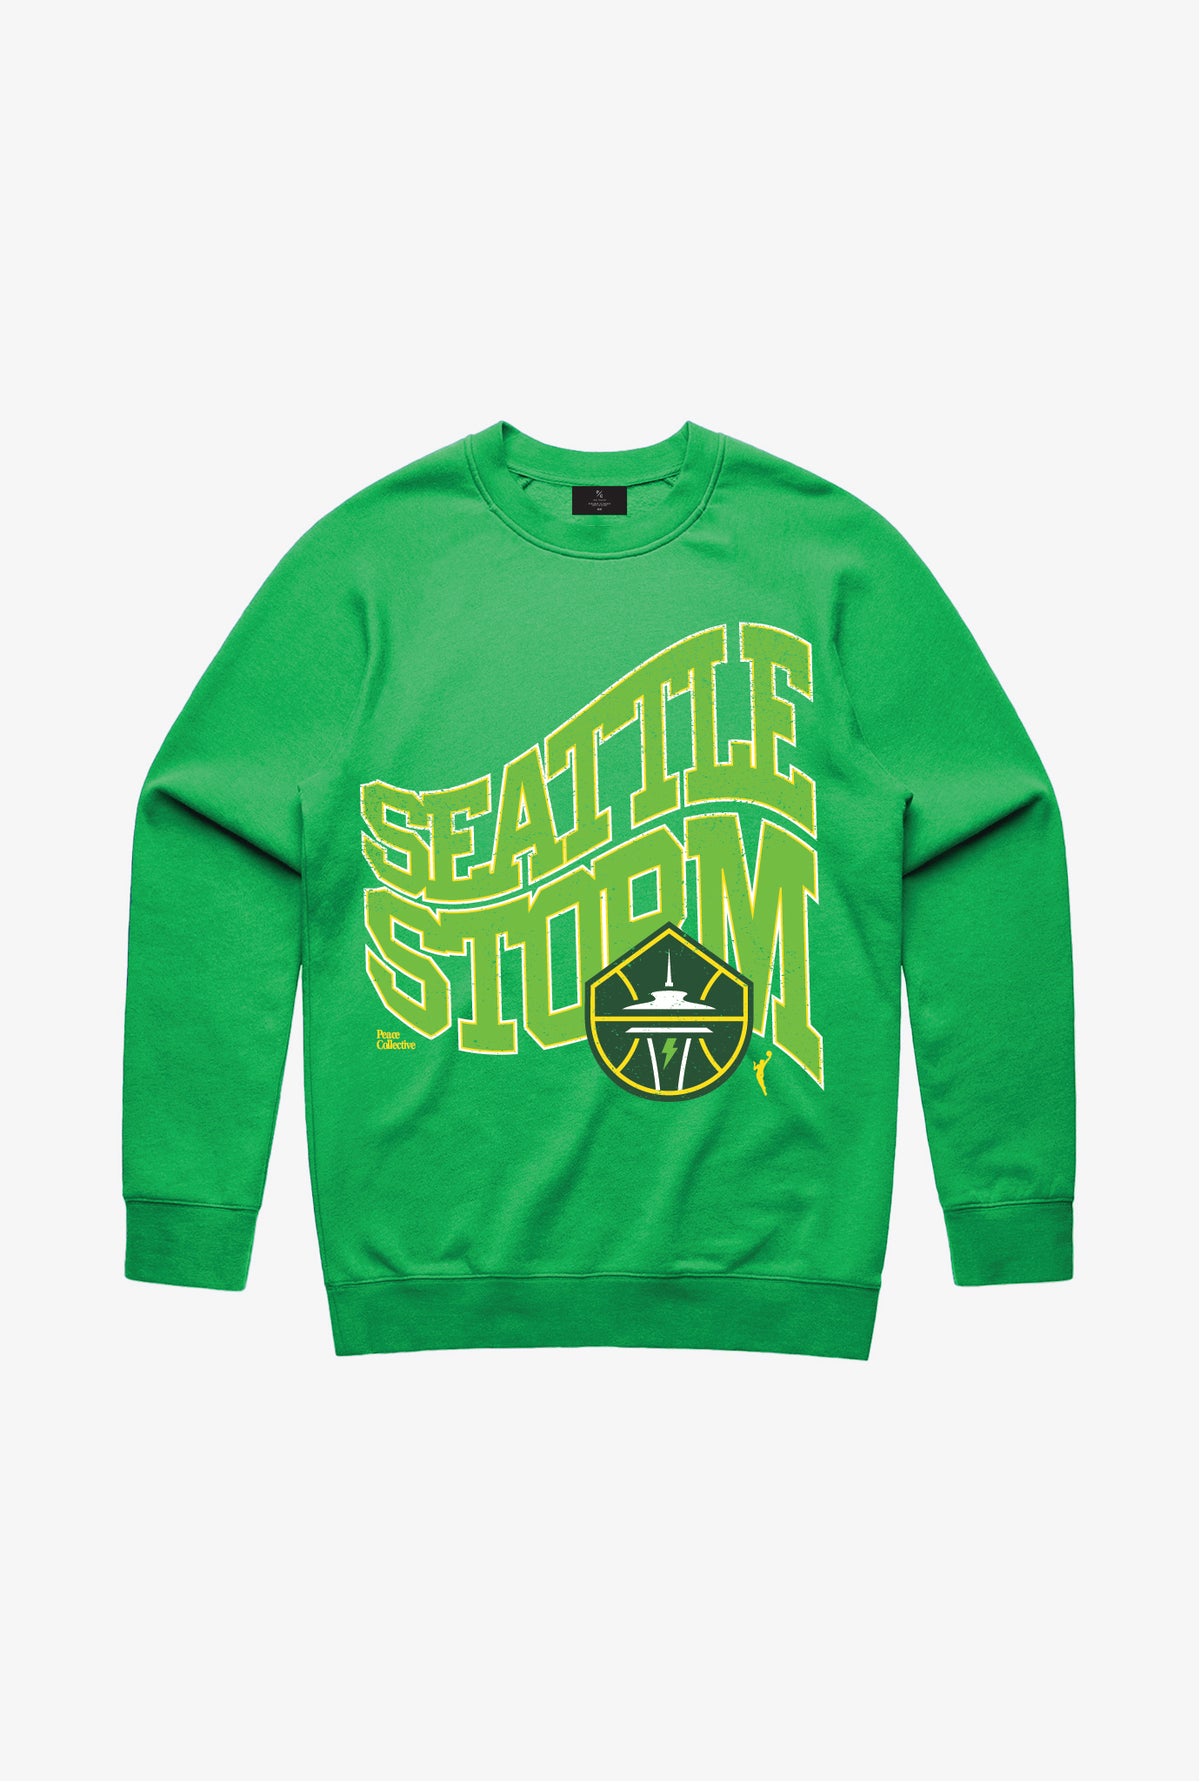 Seattle Storm Crewneck - Green